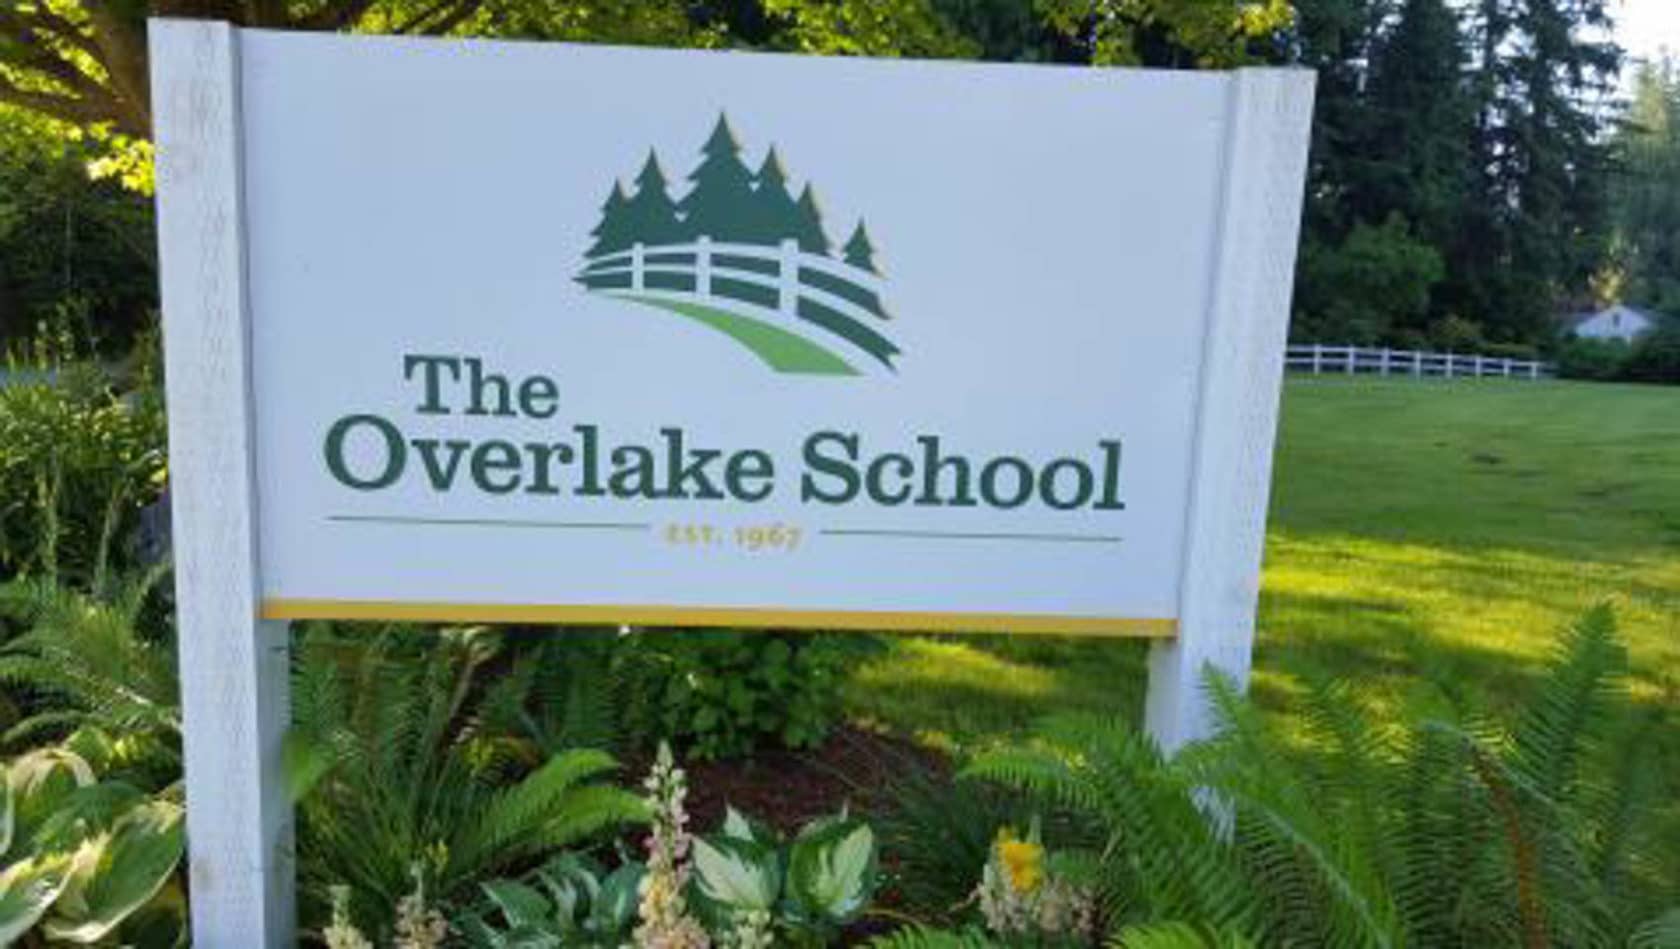 The Overlake School sign